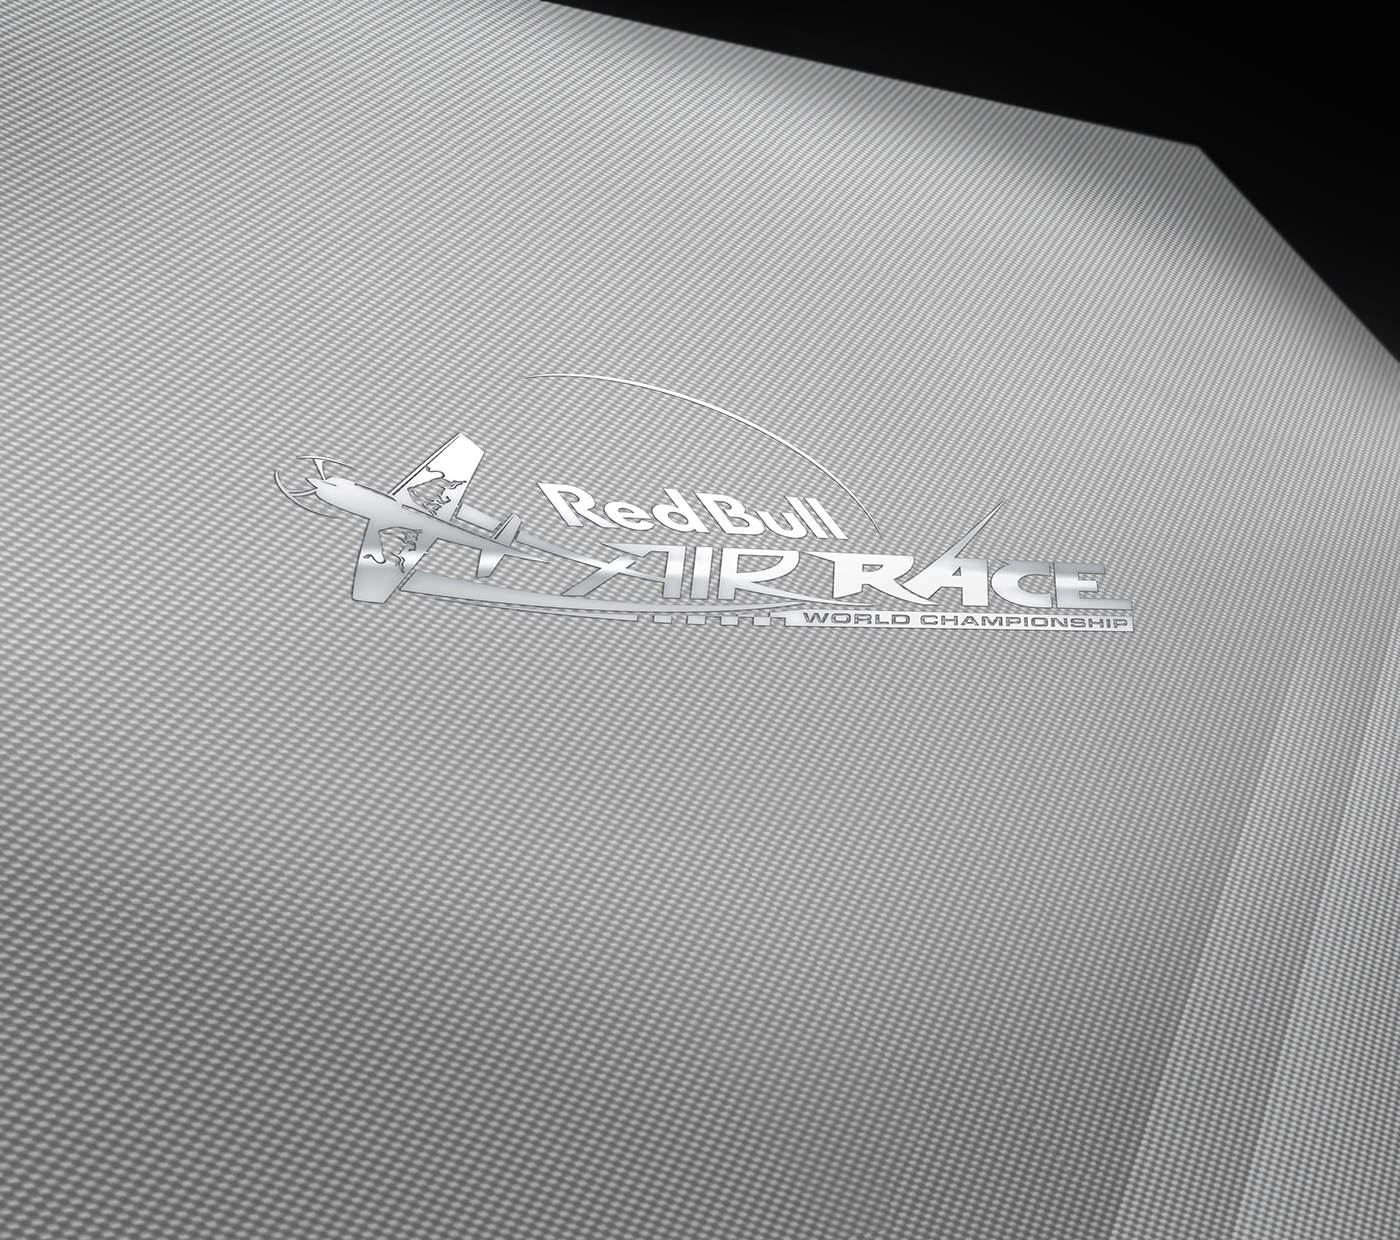 Red Bull Air Race book design pop-up pop-up book press kit sports world championship design